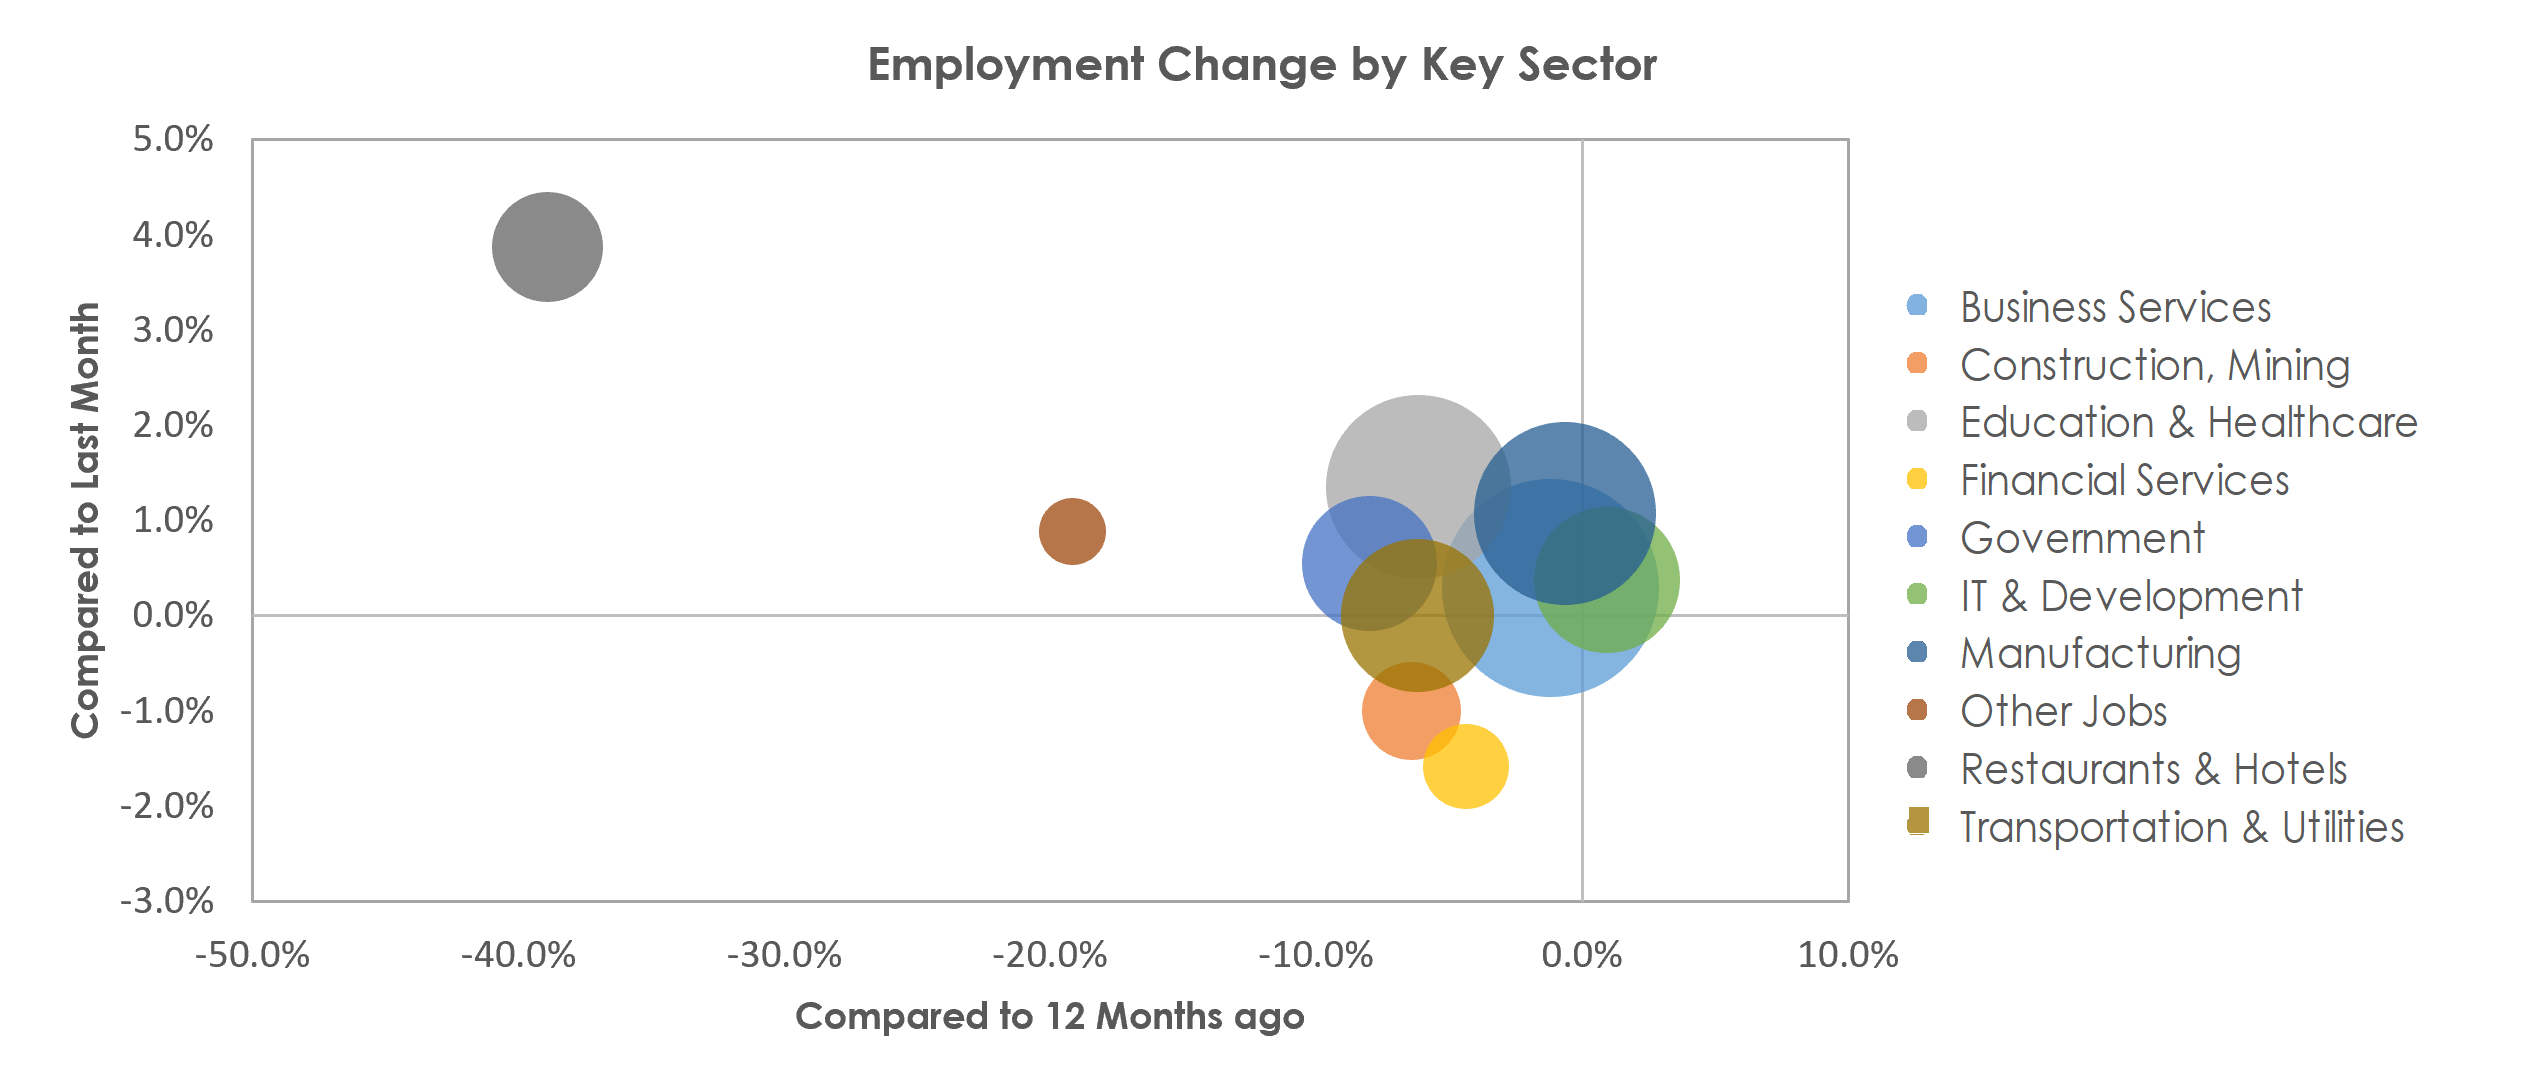 San Jose-Sunnyvale-Santa Clara, CA Unemployment by Industry March 2021